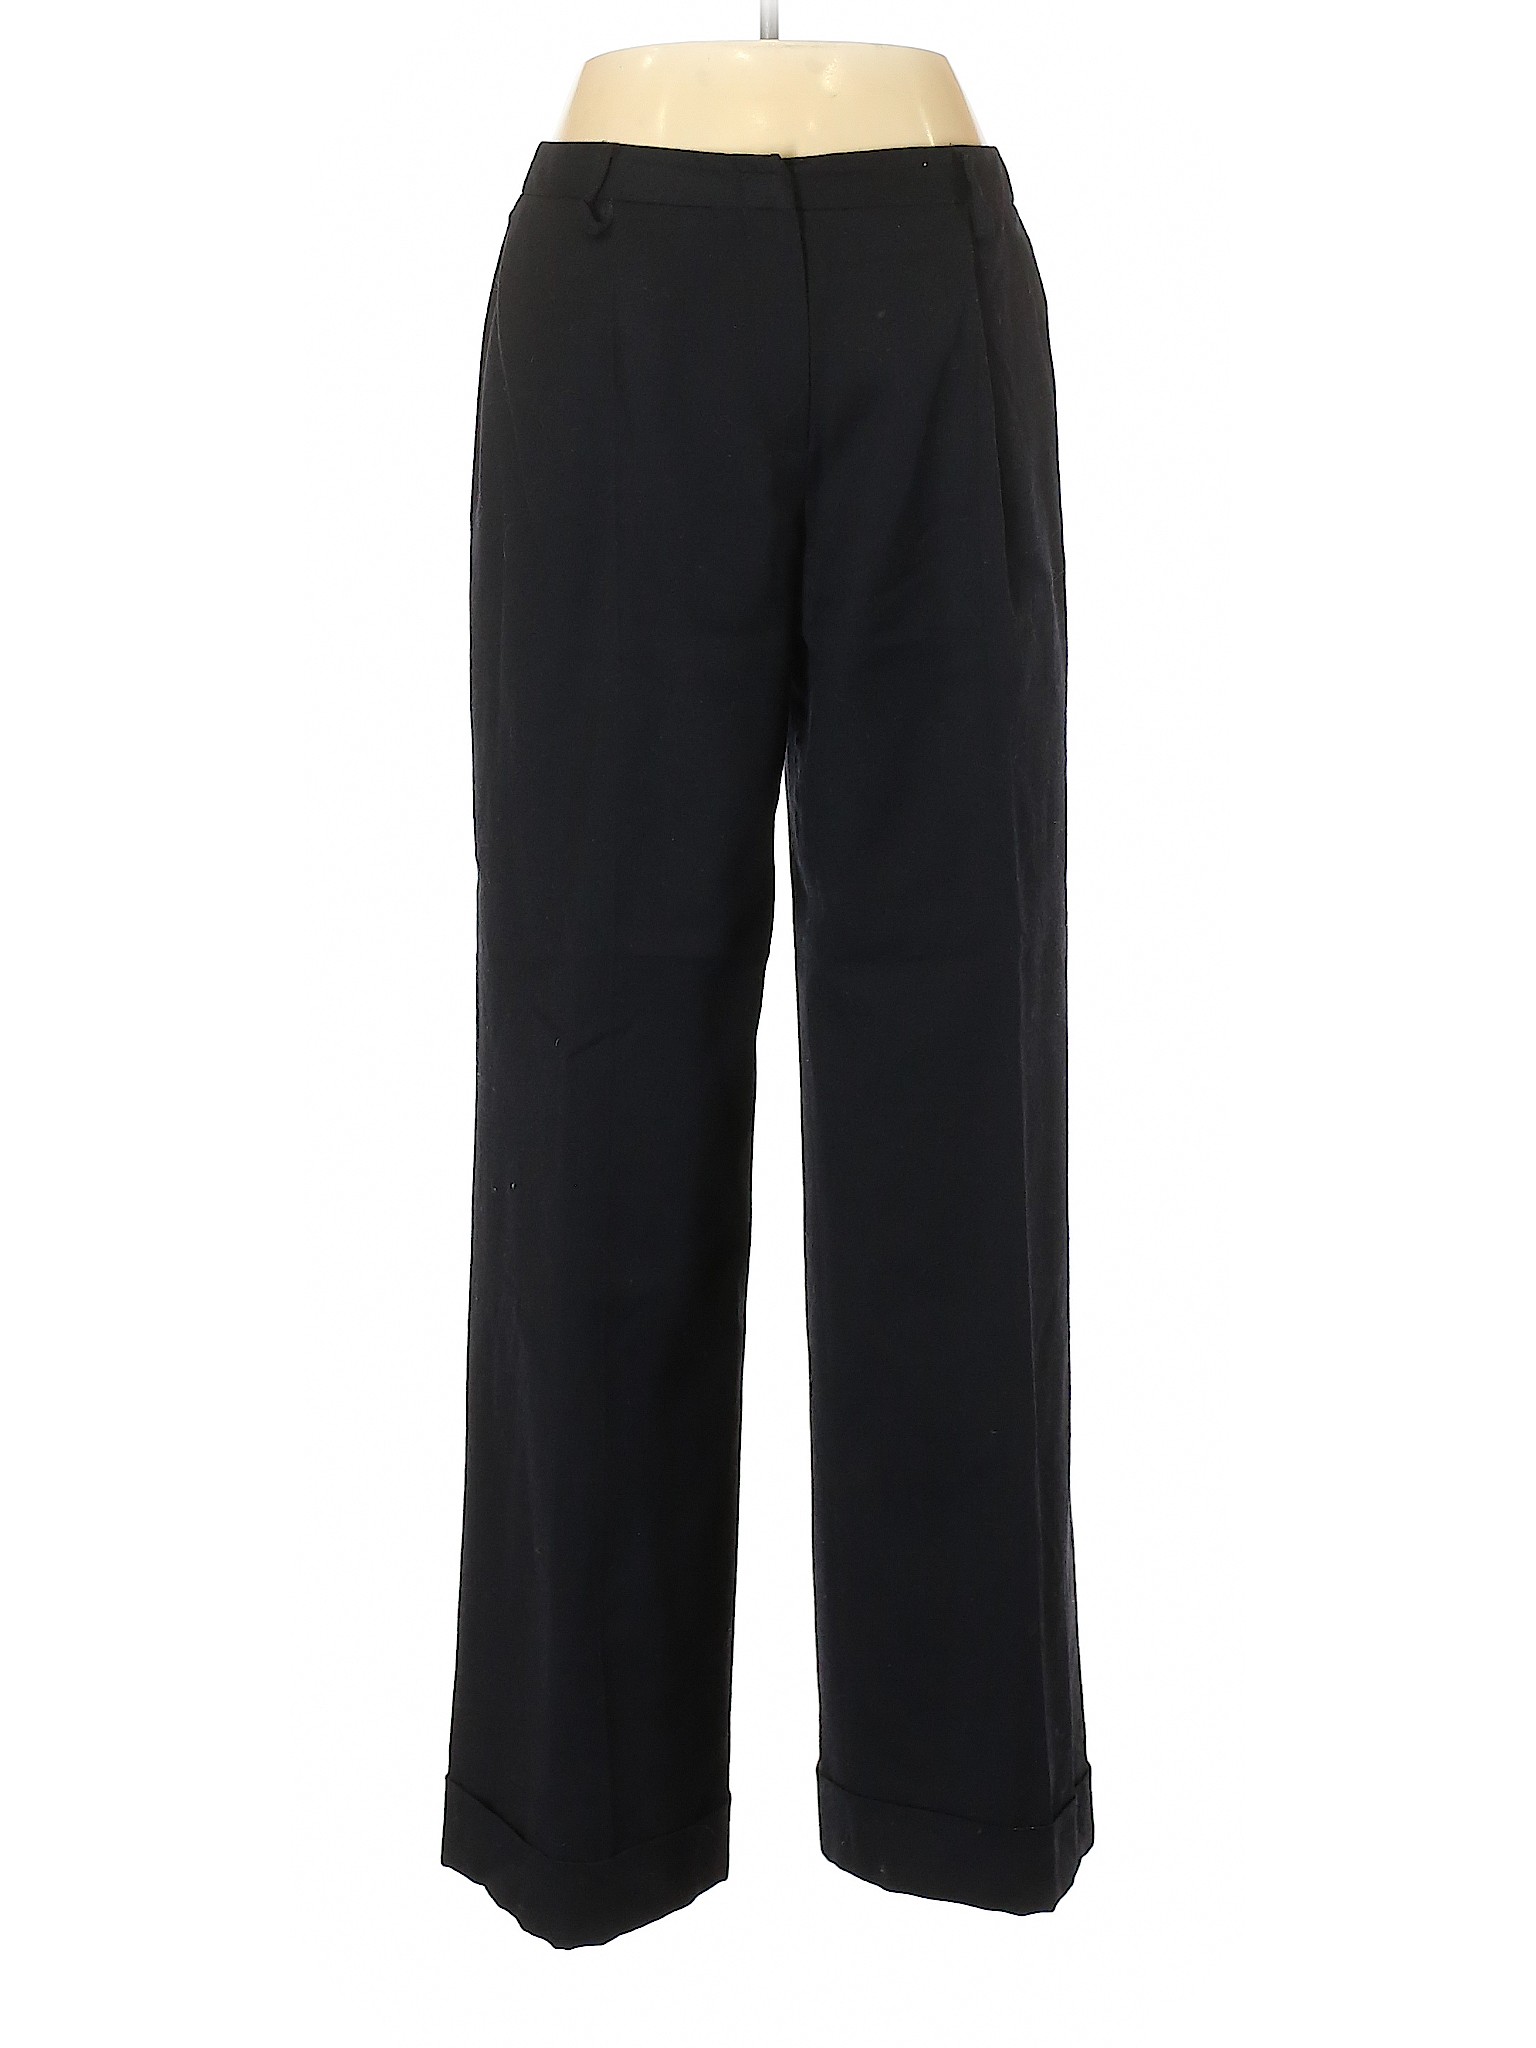 Harve Benard 100% Wool Solid Black Wool Pants Size 10 - 90% off | ThredUp